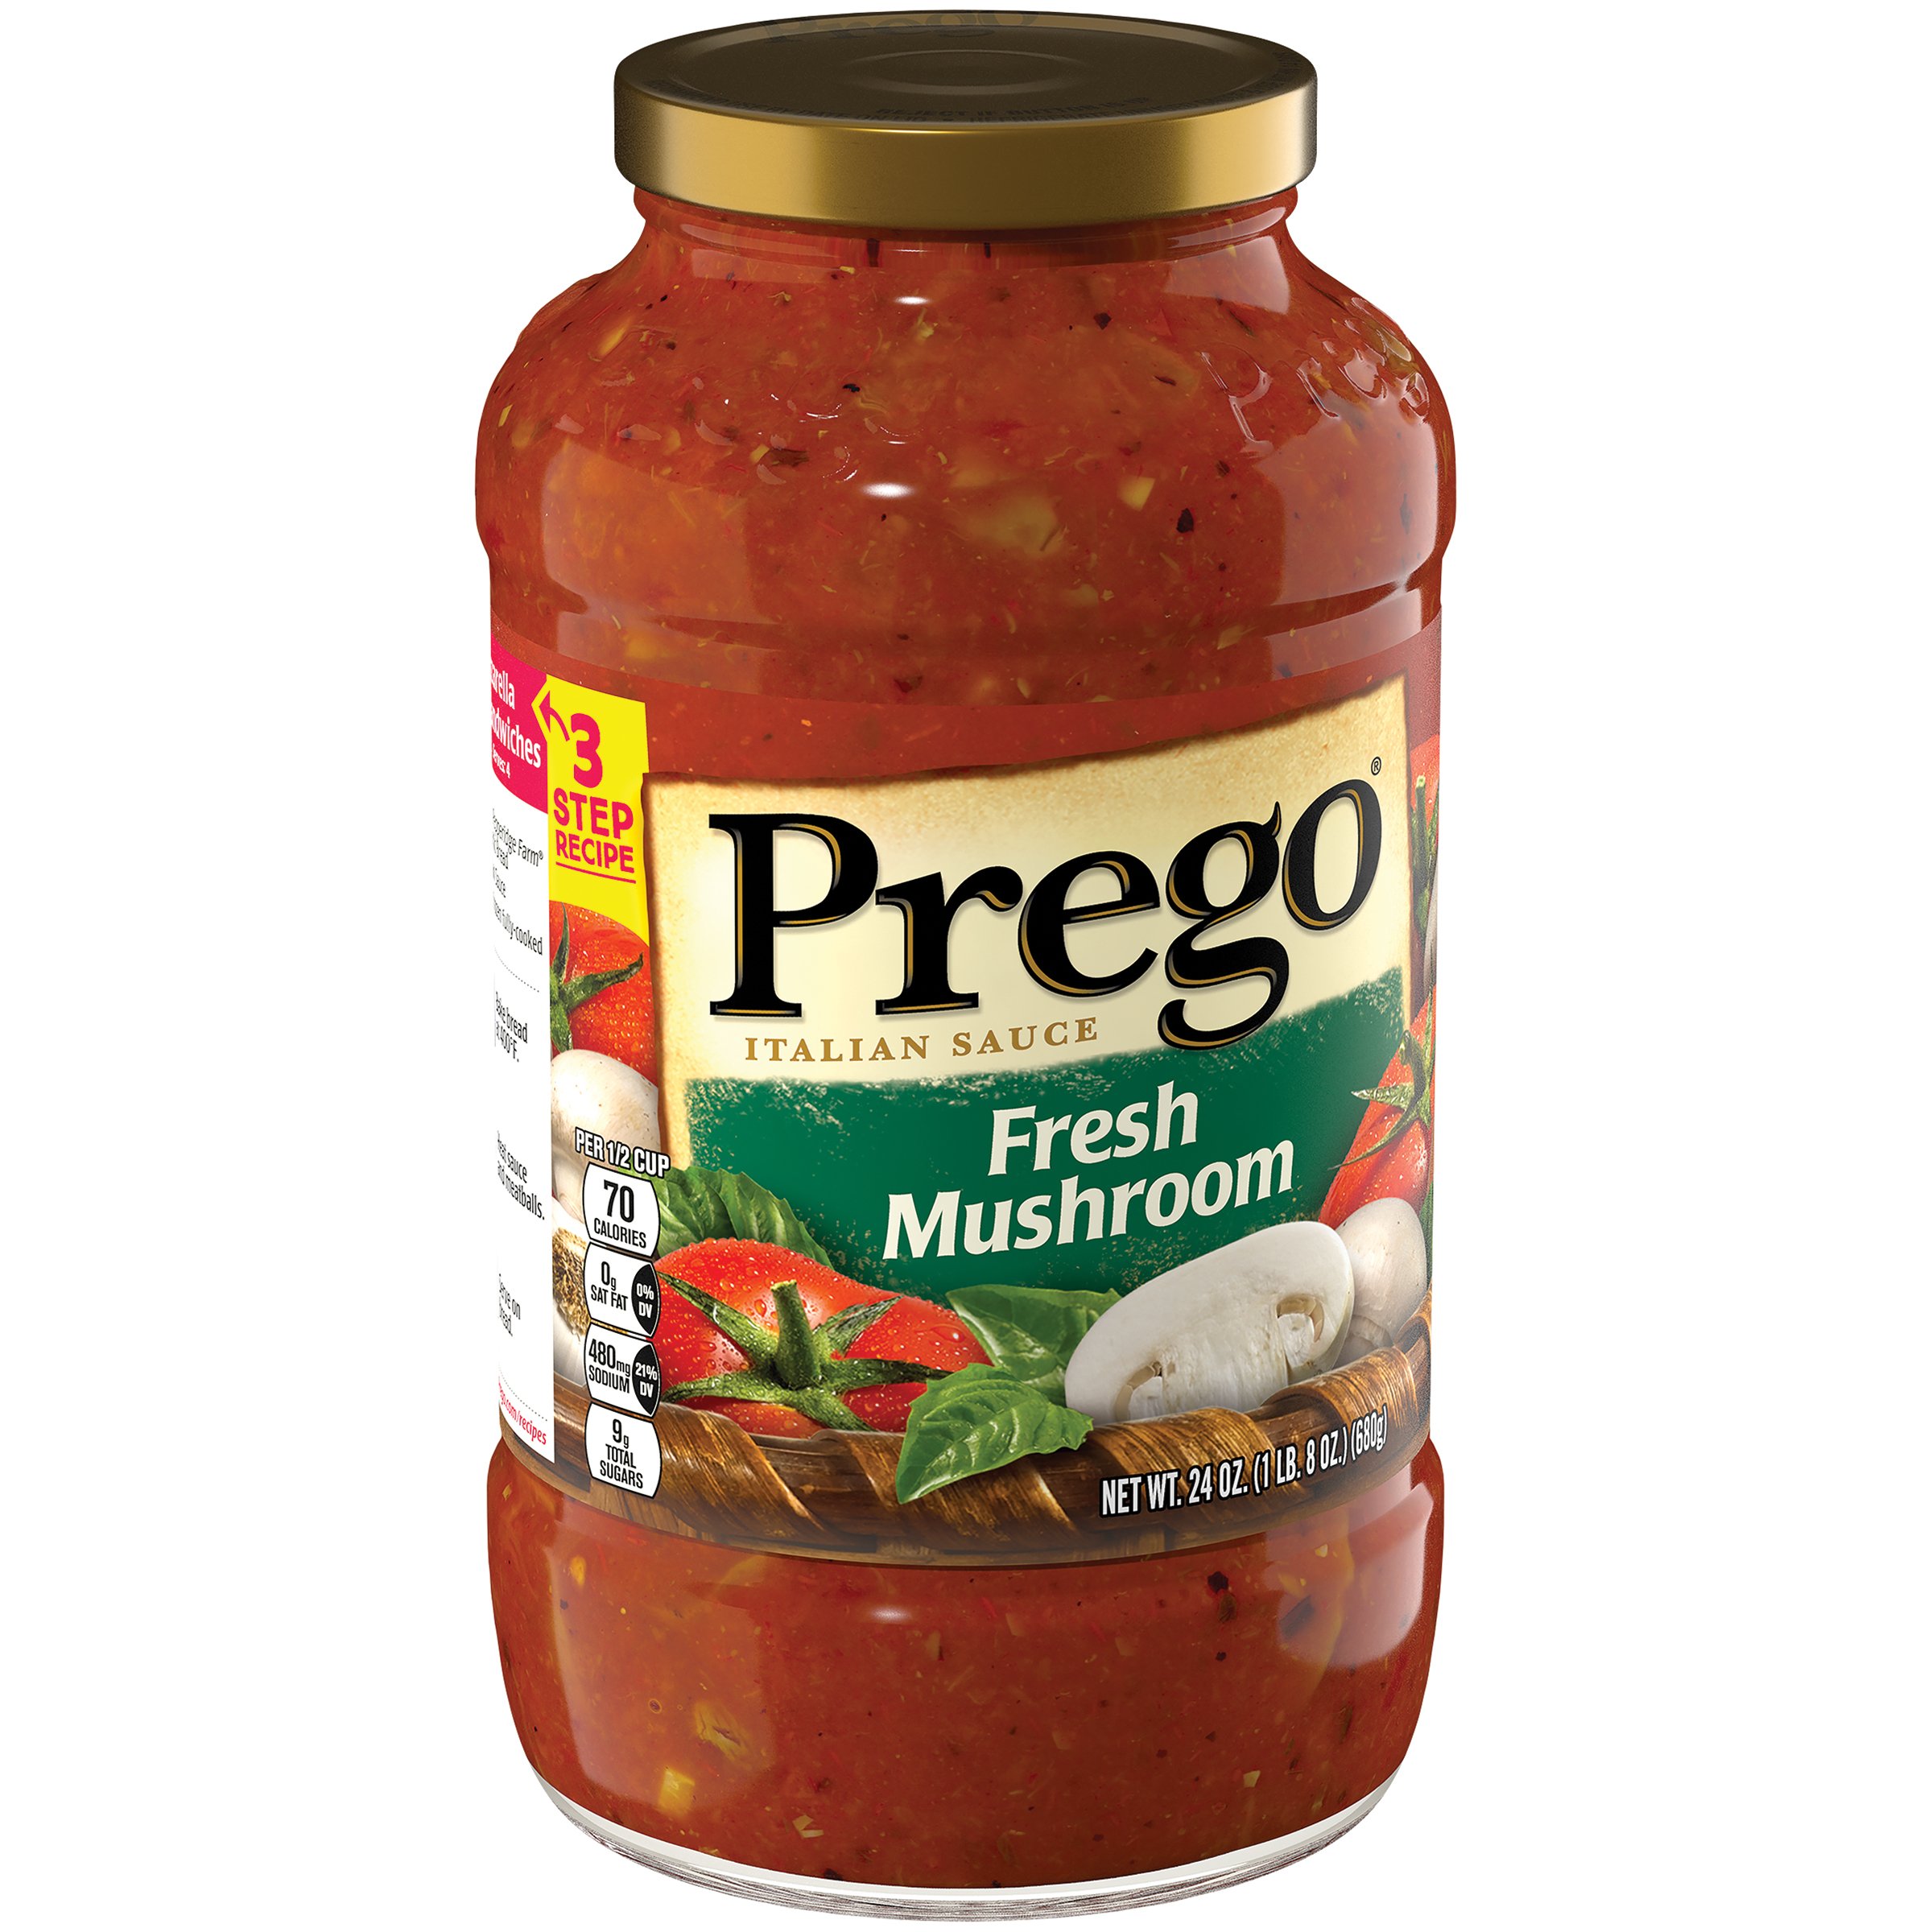 Prego® Fresh Mushroom Italian Sauce, 24 oz.